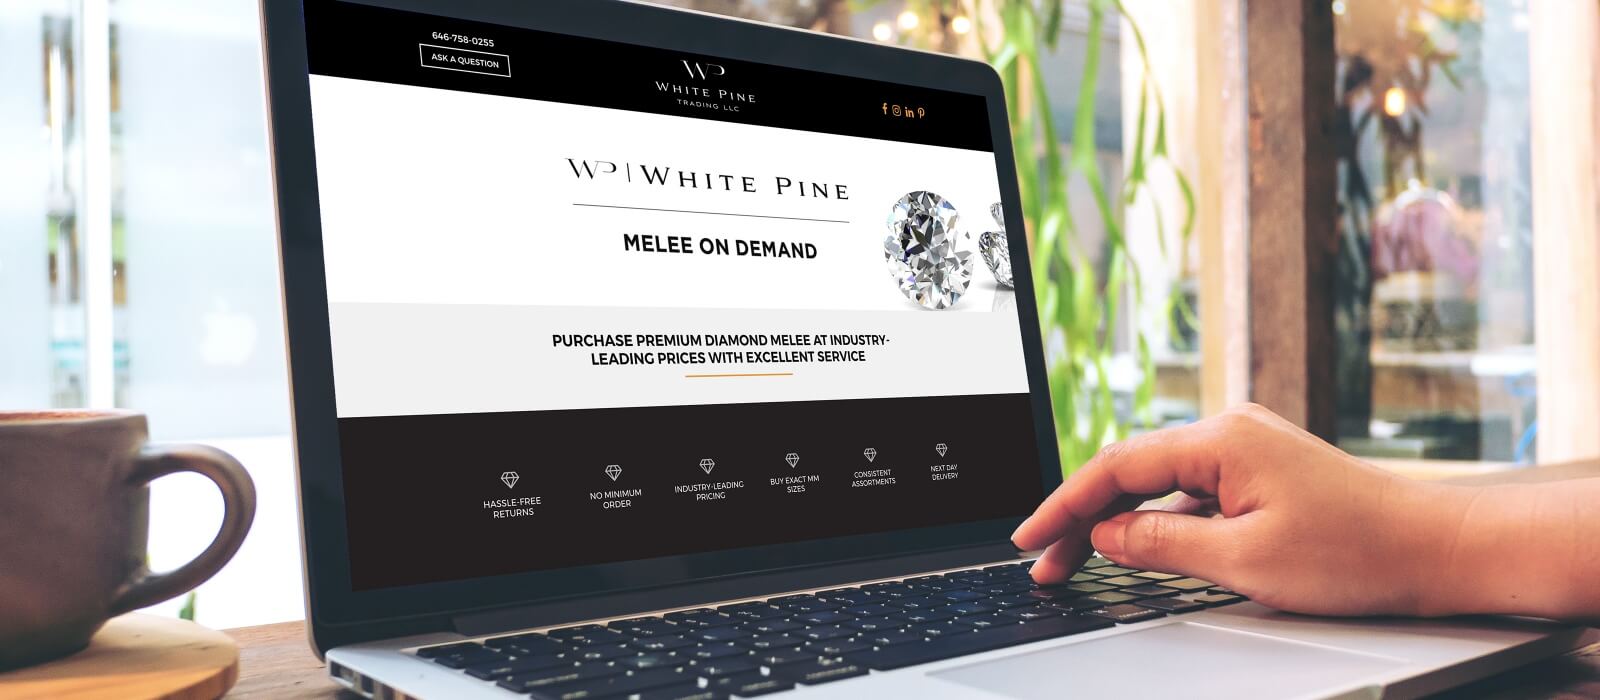 white pine diamond jewelry melee parcel website responsive laptop mobile friendly